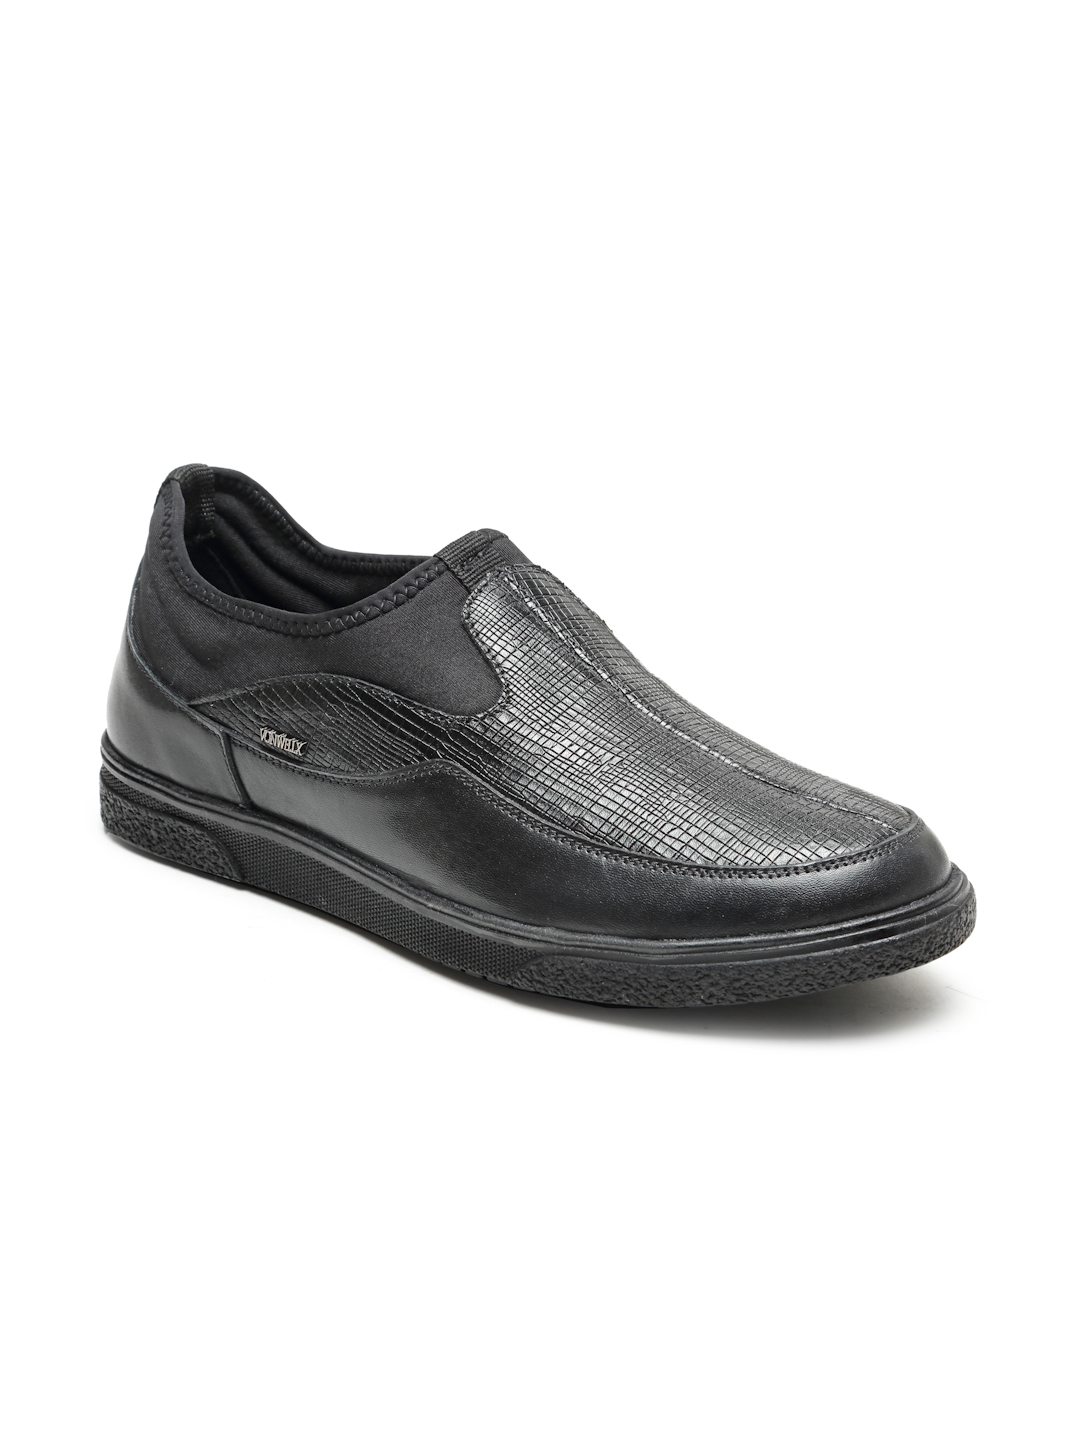 Buy Von Wellx Germany Comfort Men's Black Casual Loafers Everett Online in Dammam